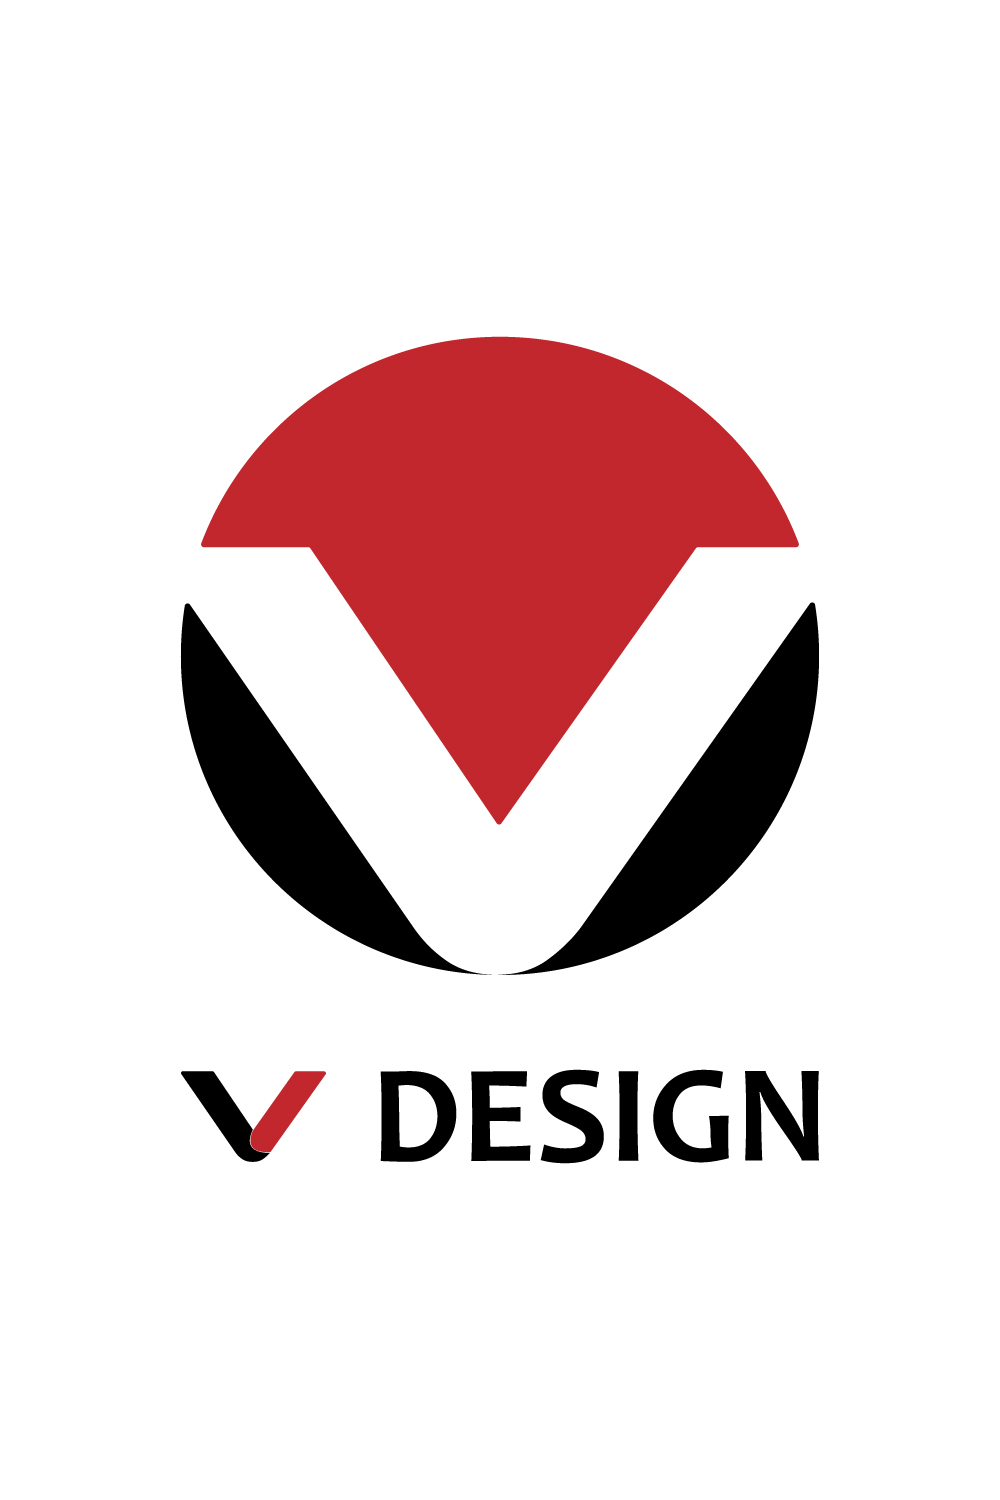 Initials V letter logo design red black ang white color best icon V logo monogram vector template illustration pinterest preview image.